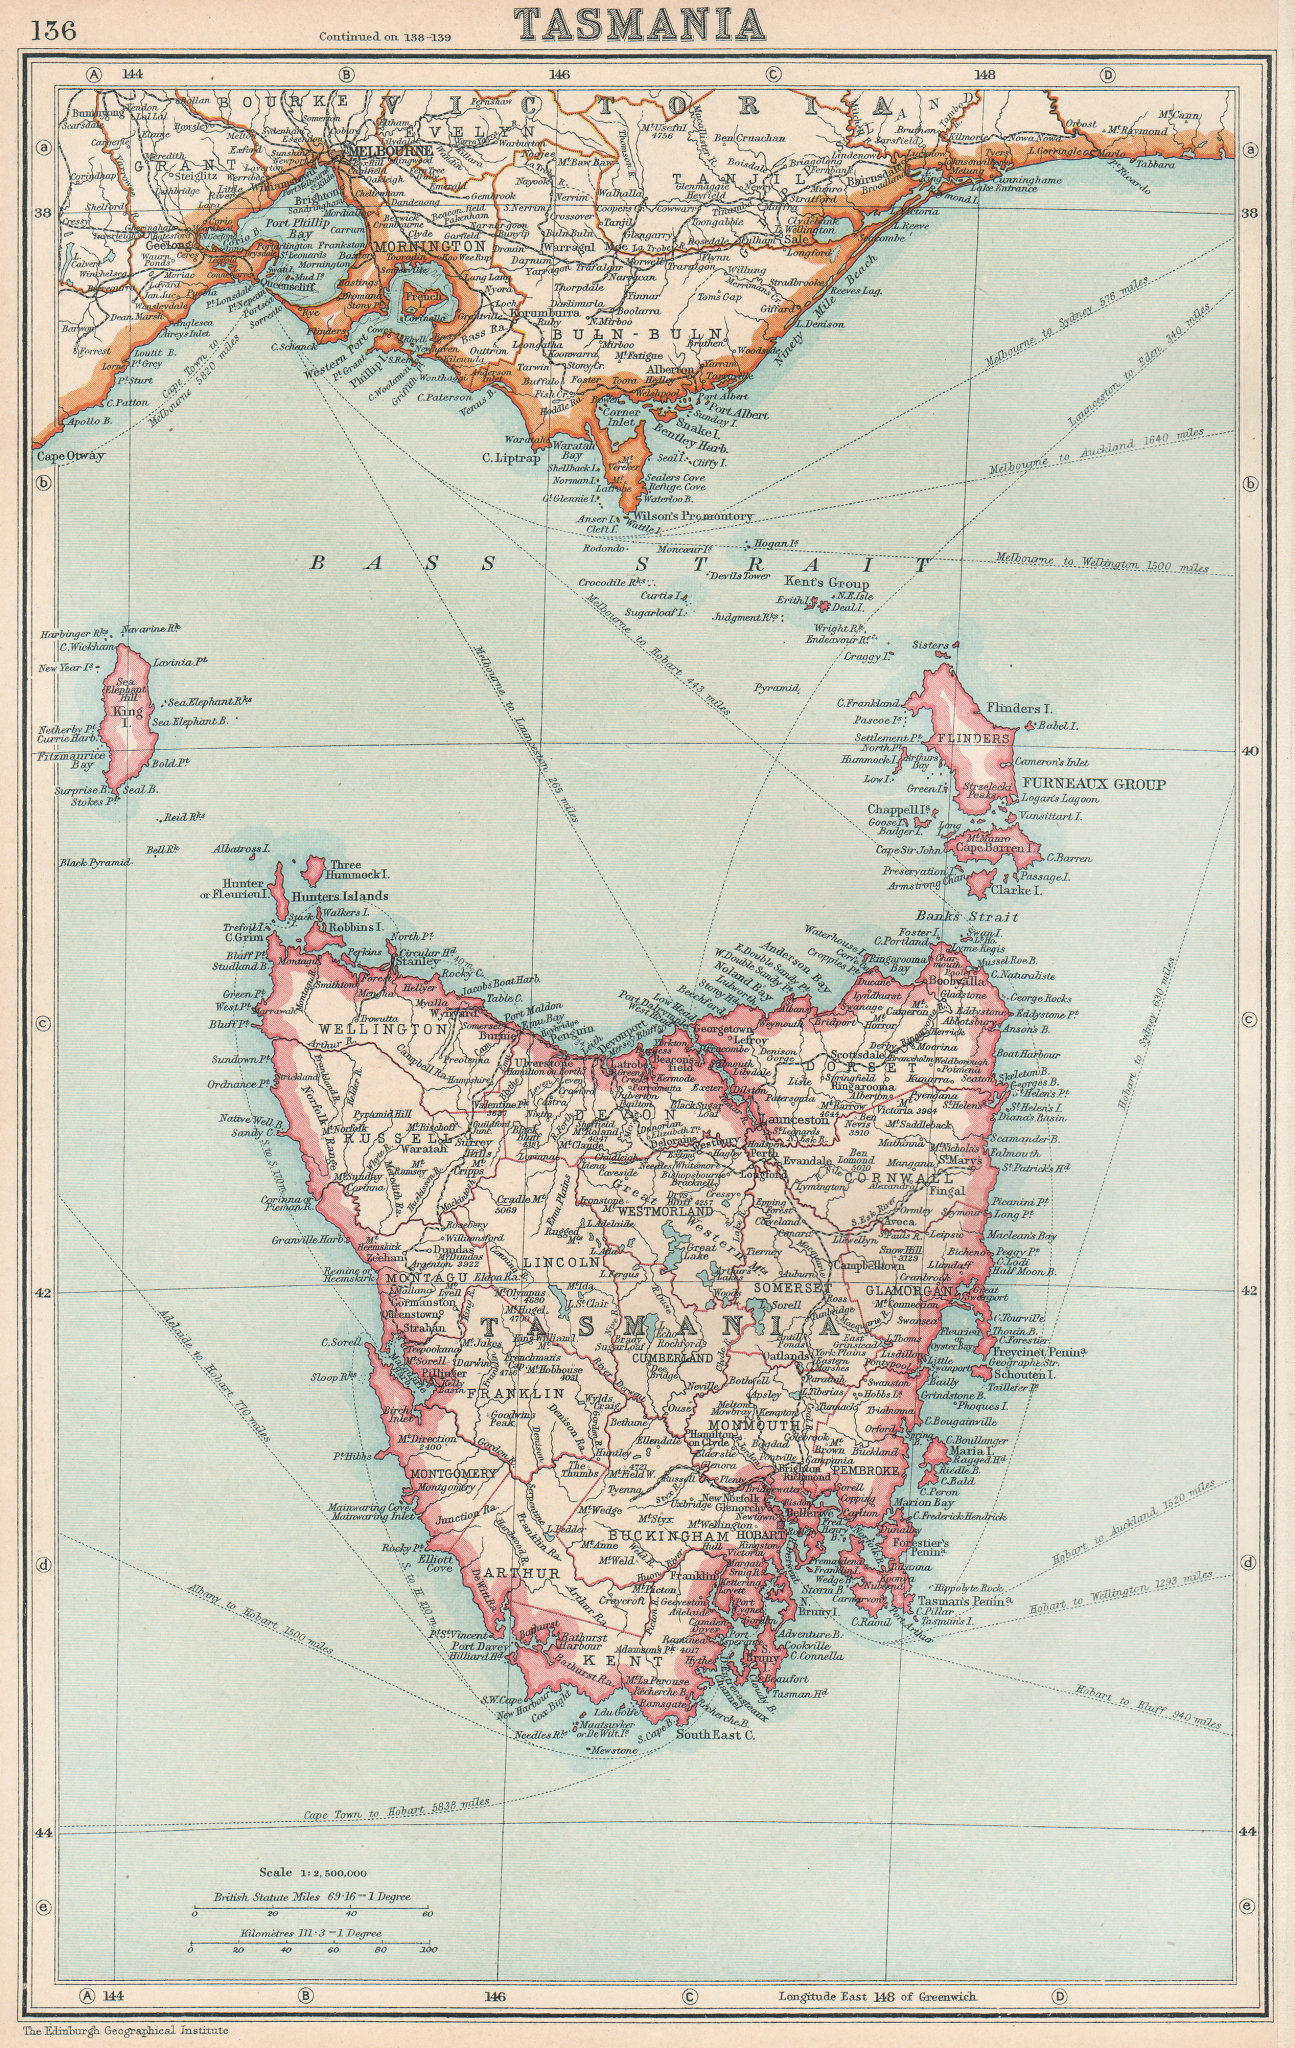 Associate Product TASMANIA. state map showing counties. Australia. BARTHOLOMEW 1924 old